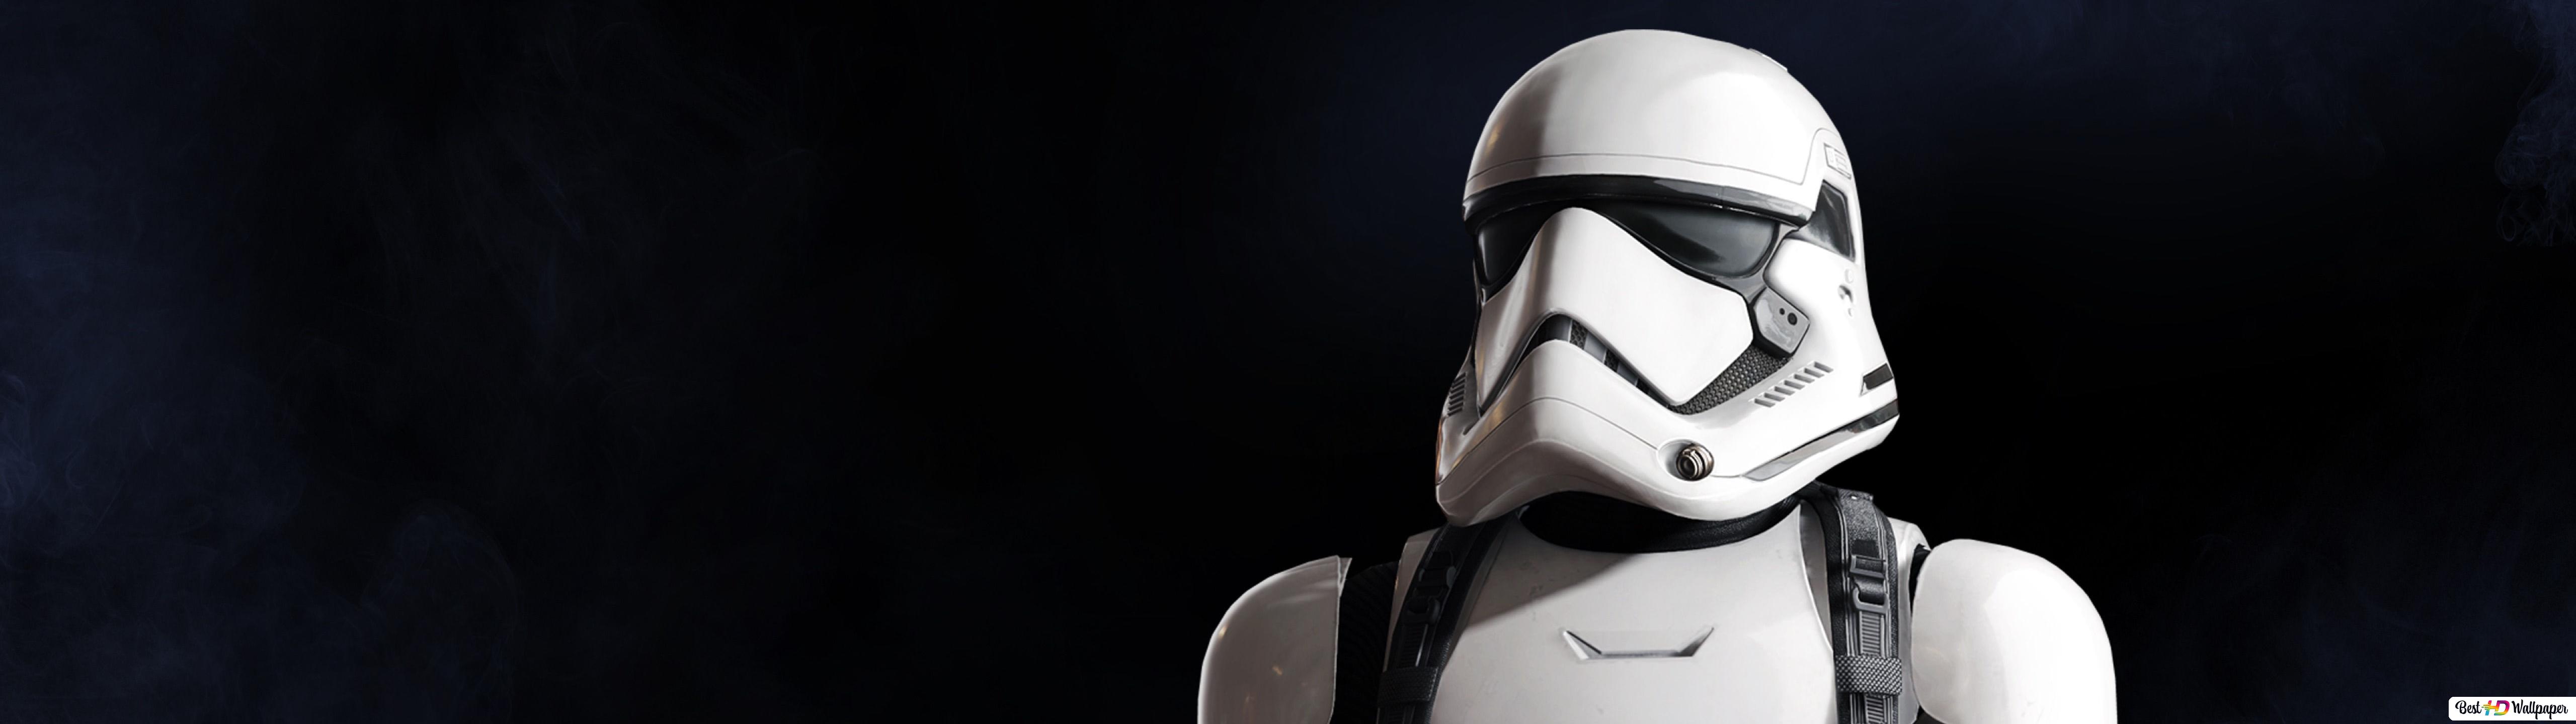 Star Wars: Battlefront 2 game HD wallpaper download